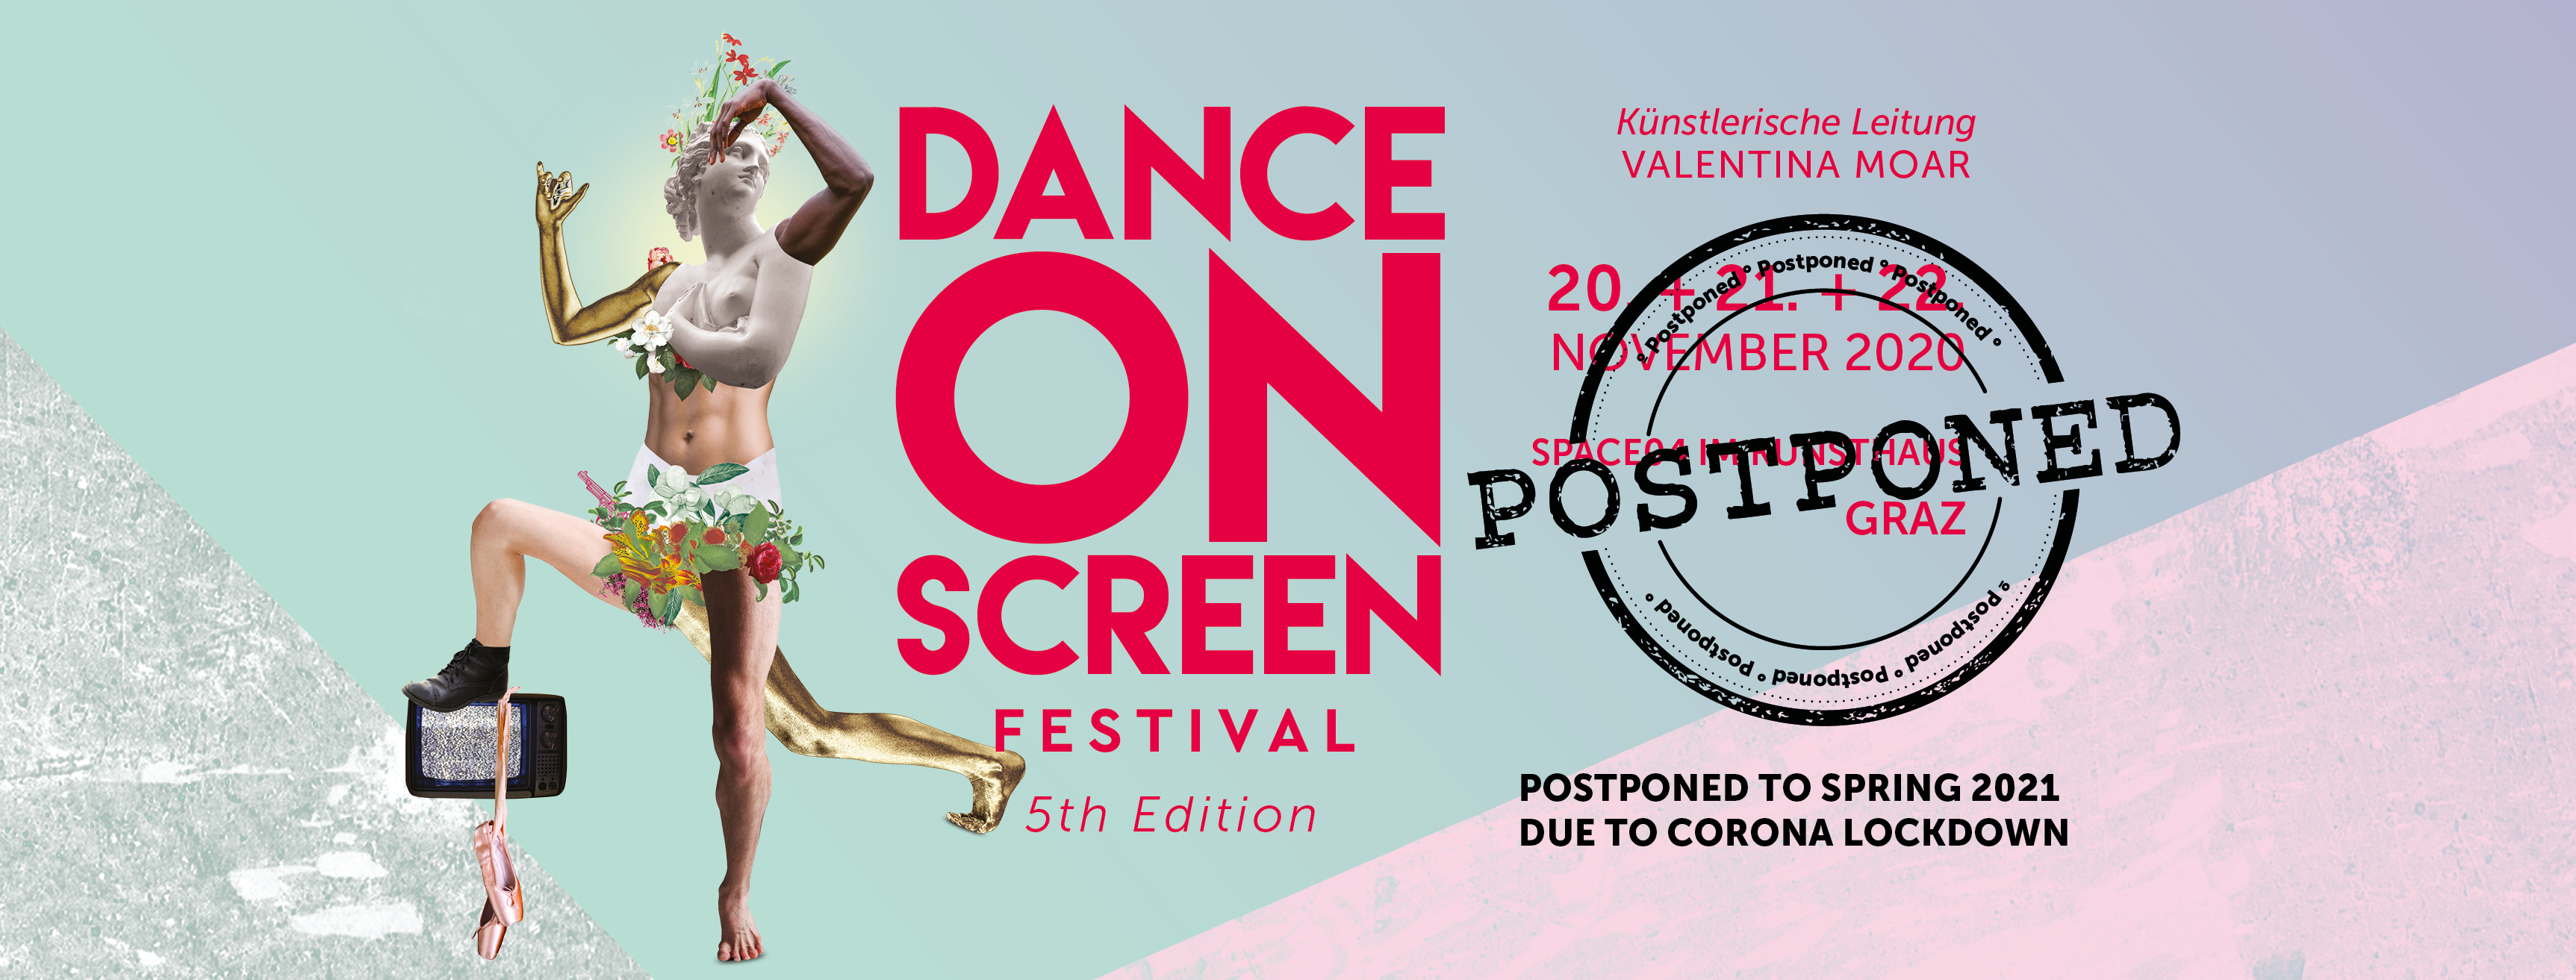 www.danceonscreen.at Dance On Screen 5th Edition 2020 - Dance Film Festival